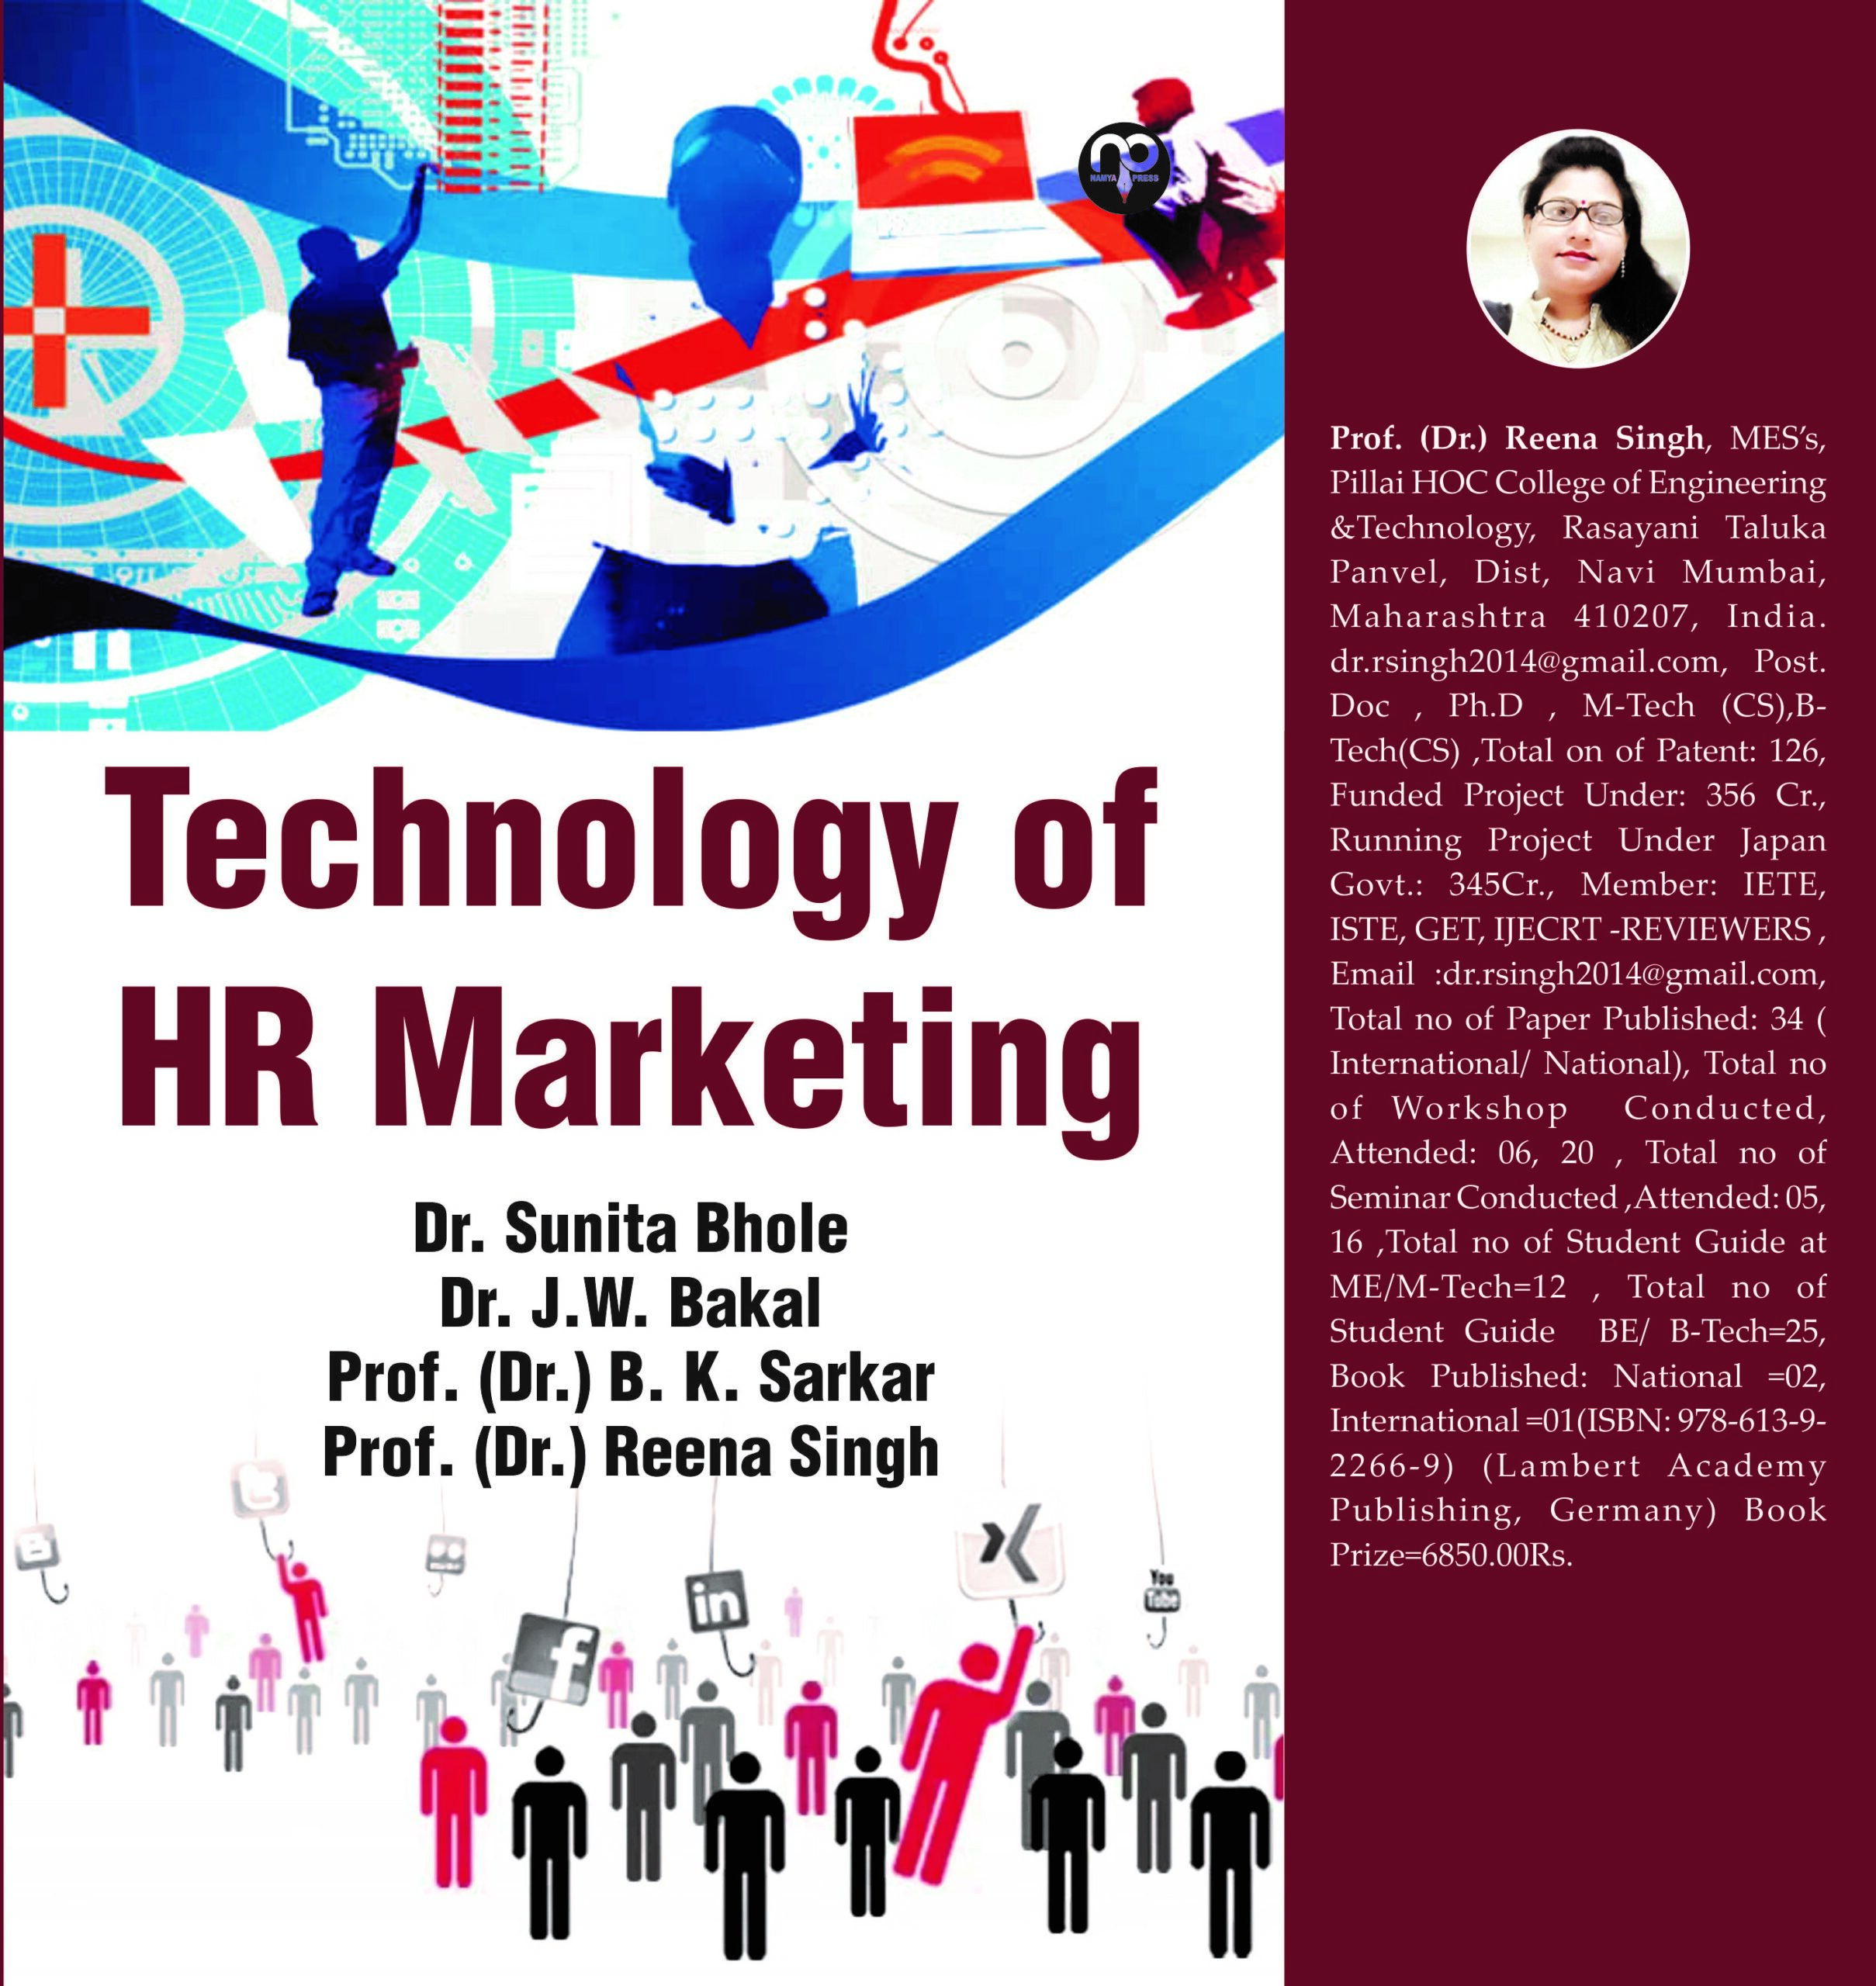 Technology of HR Marketing